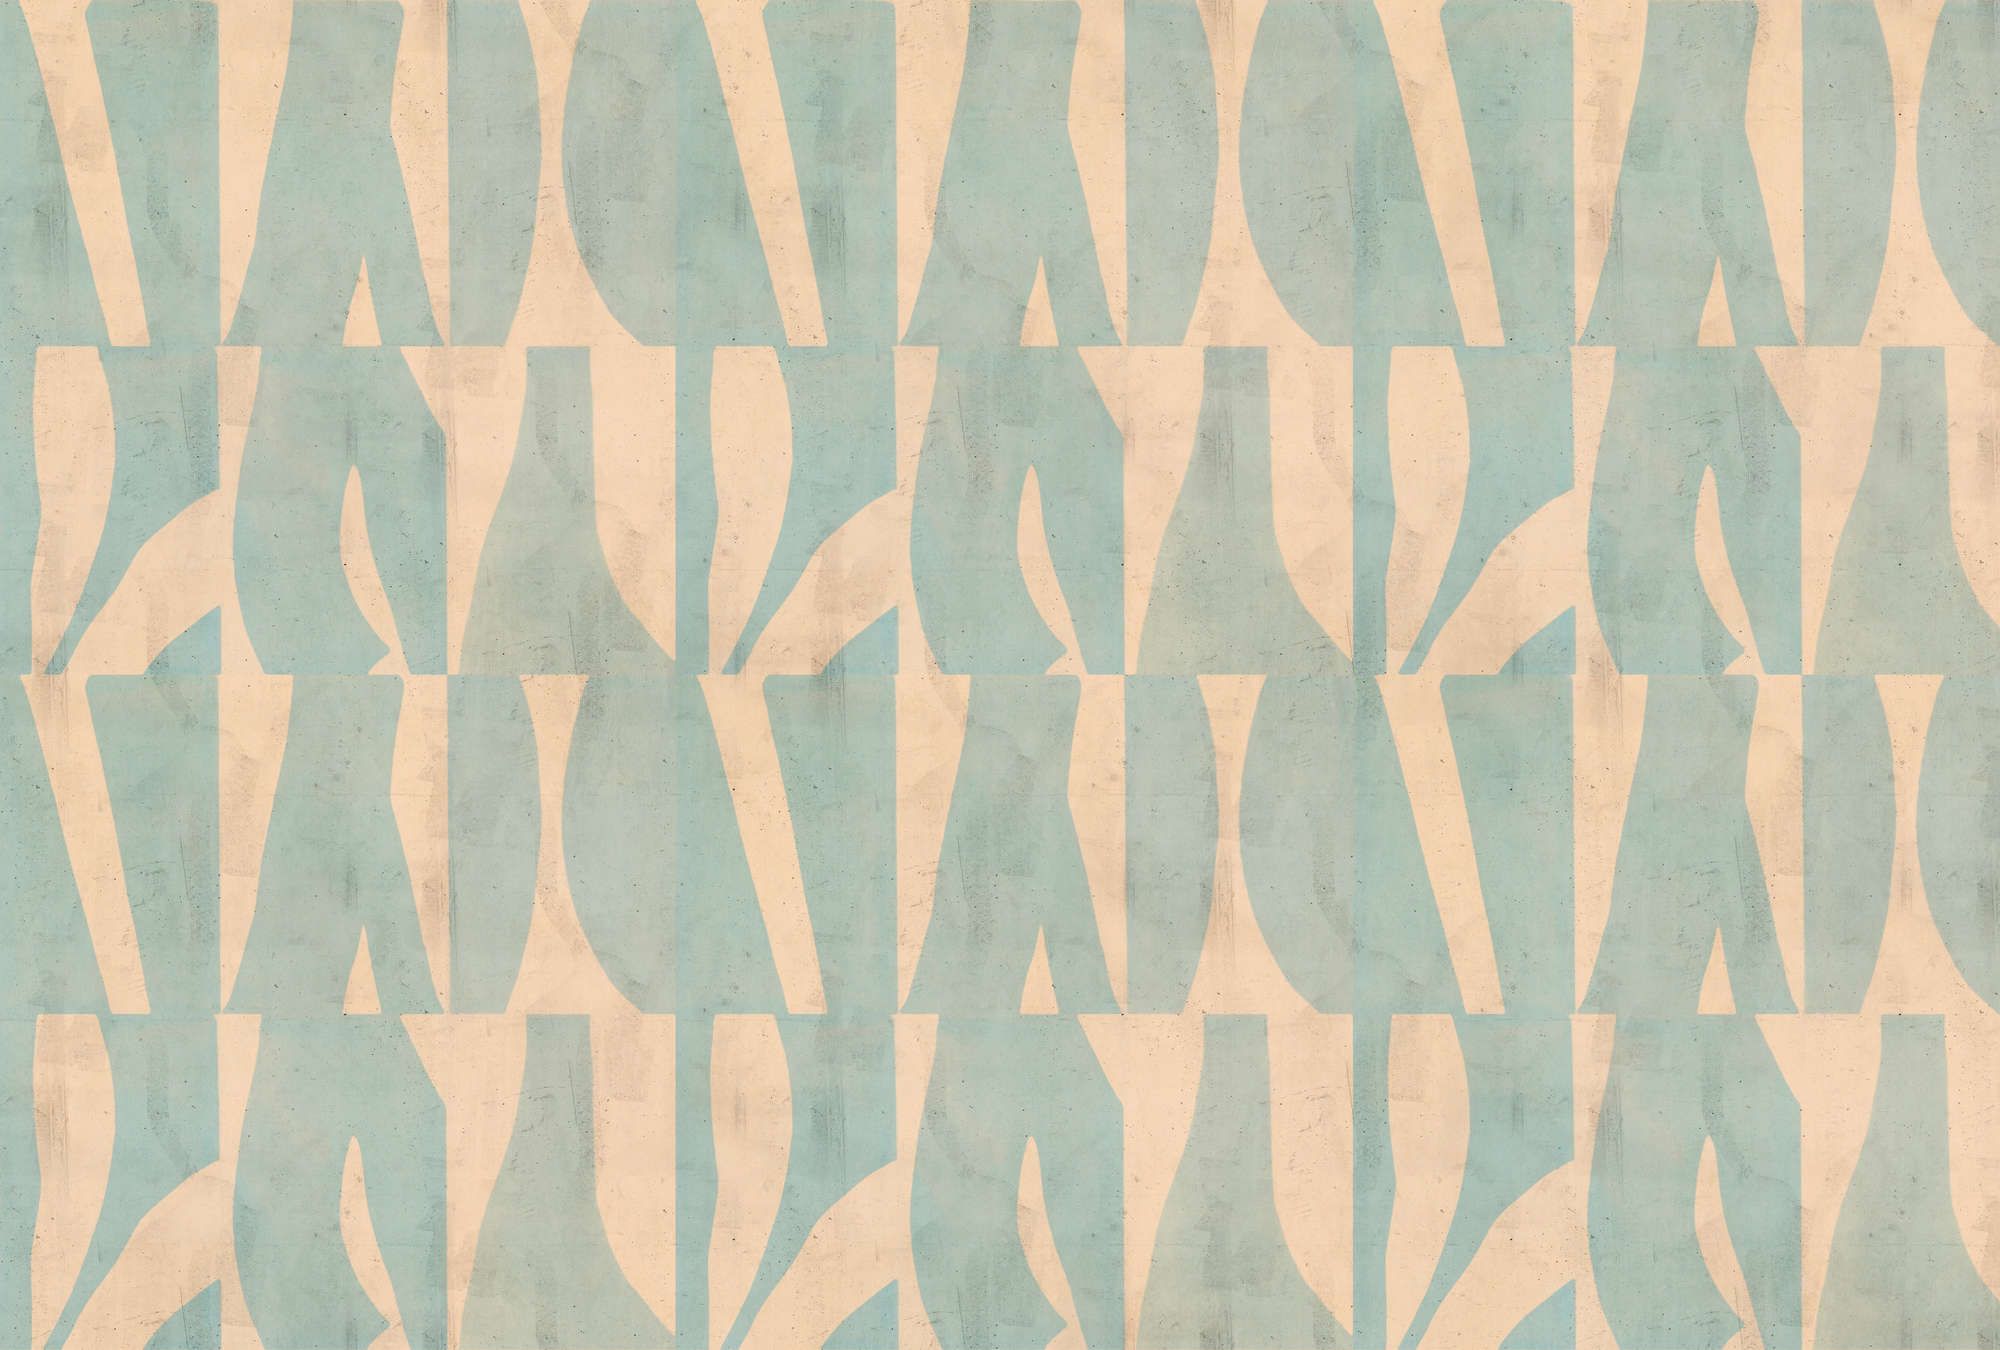             Photo wallpaper »laila« - Graphic pattern on concrete plaster texture - Beige, mint green | matt, smooth non-woven fabric
        